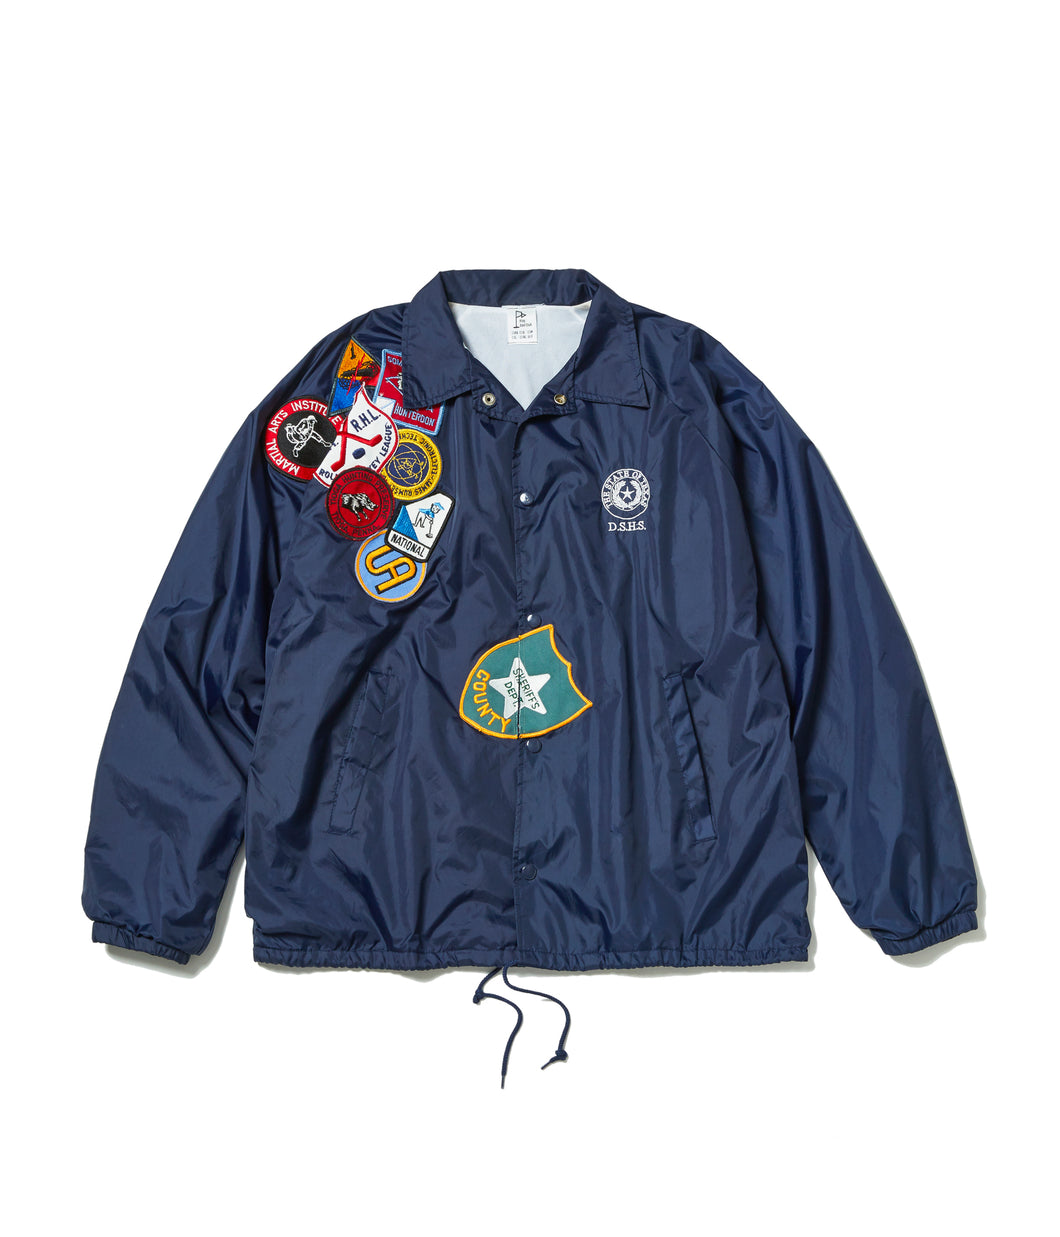 【Remake vol-4】With emblem coach jacket